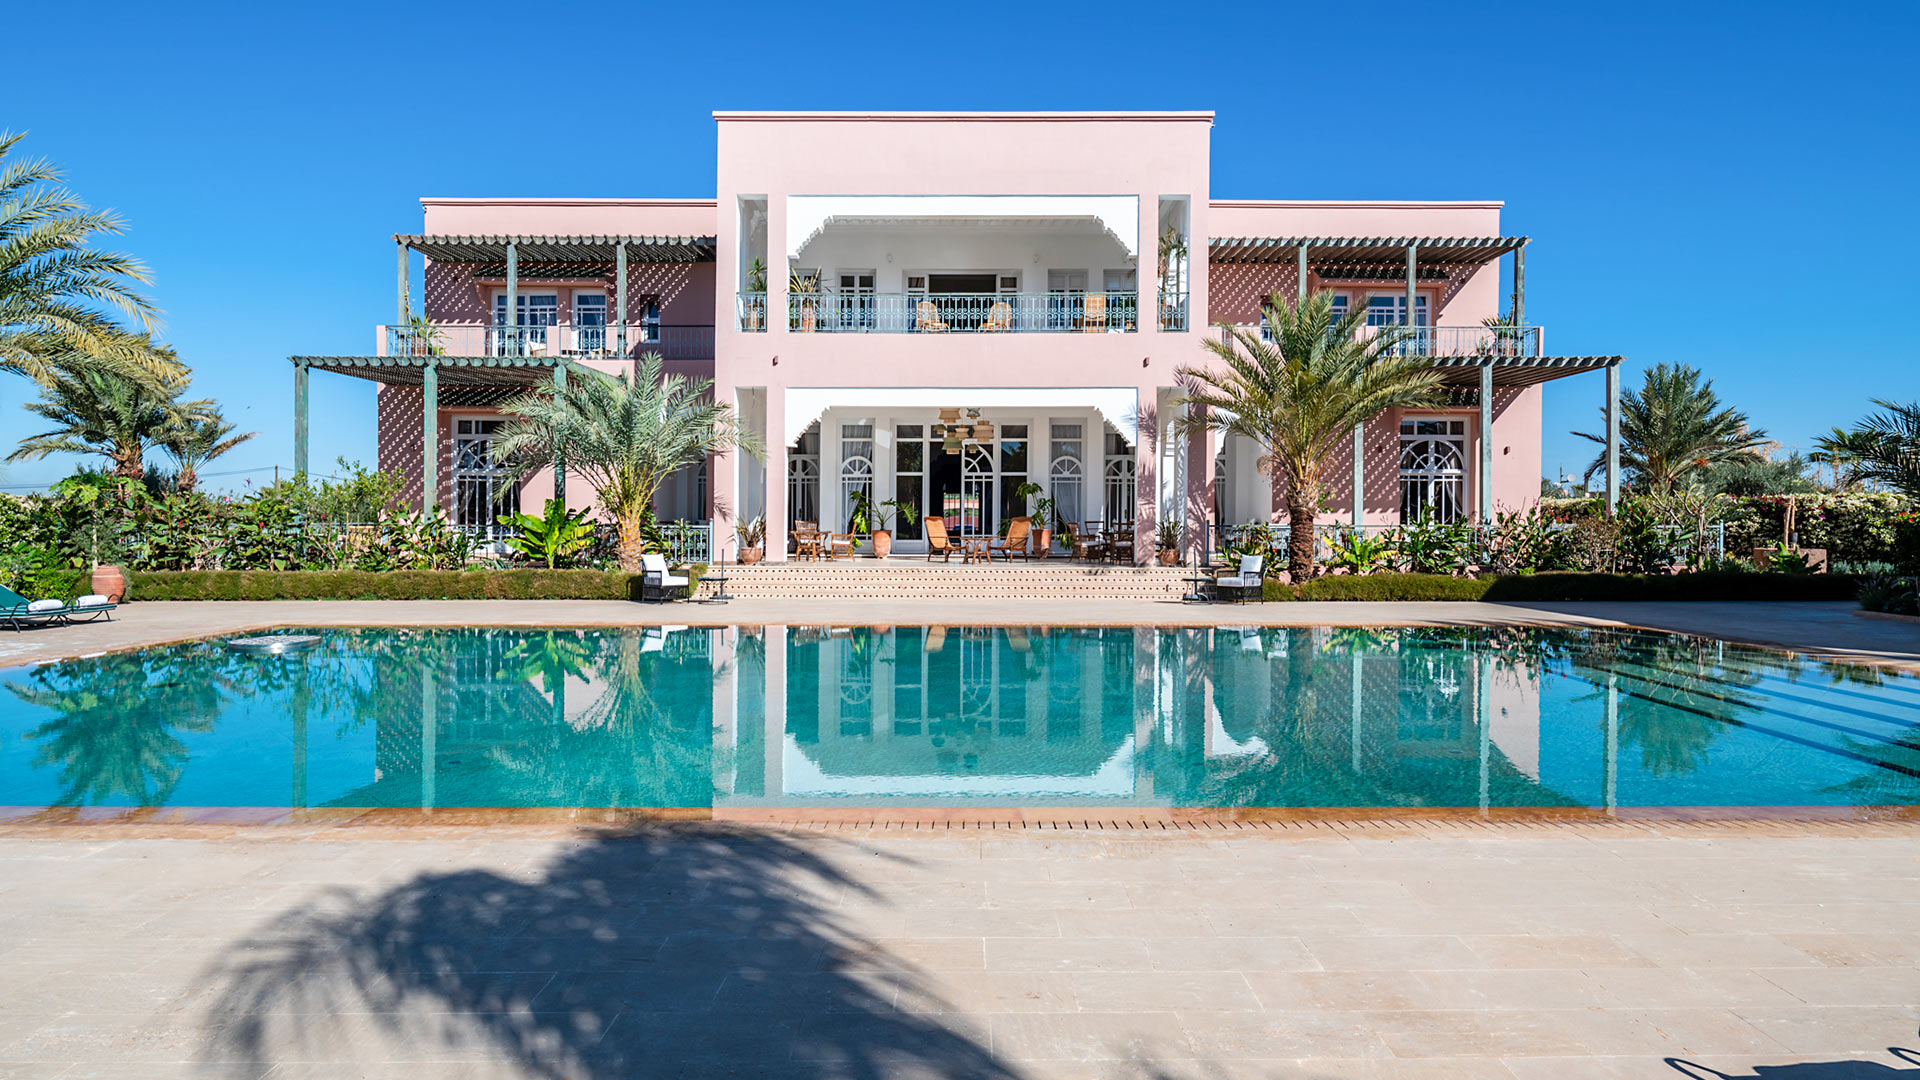 Villa Villa Altine, Rental in Marrakech